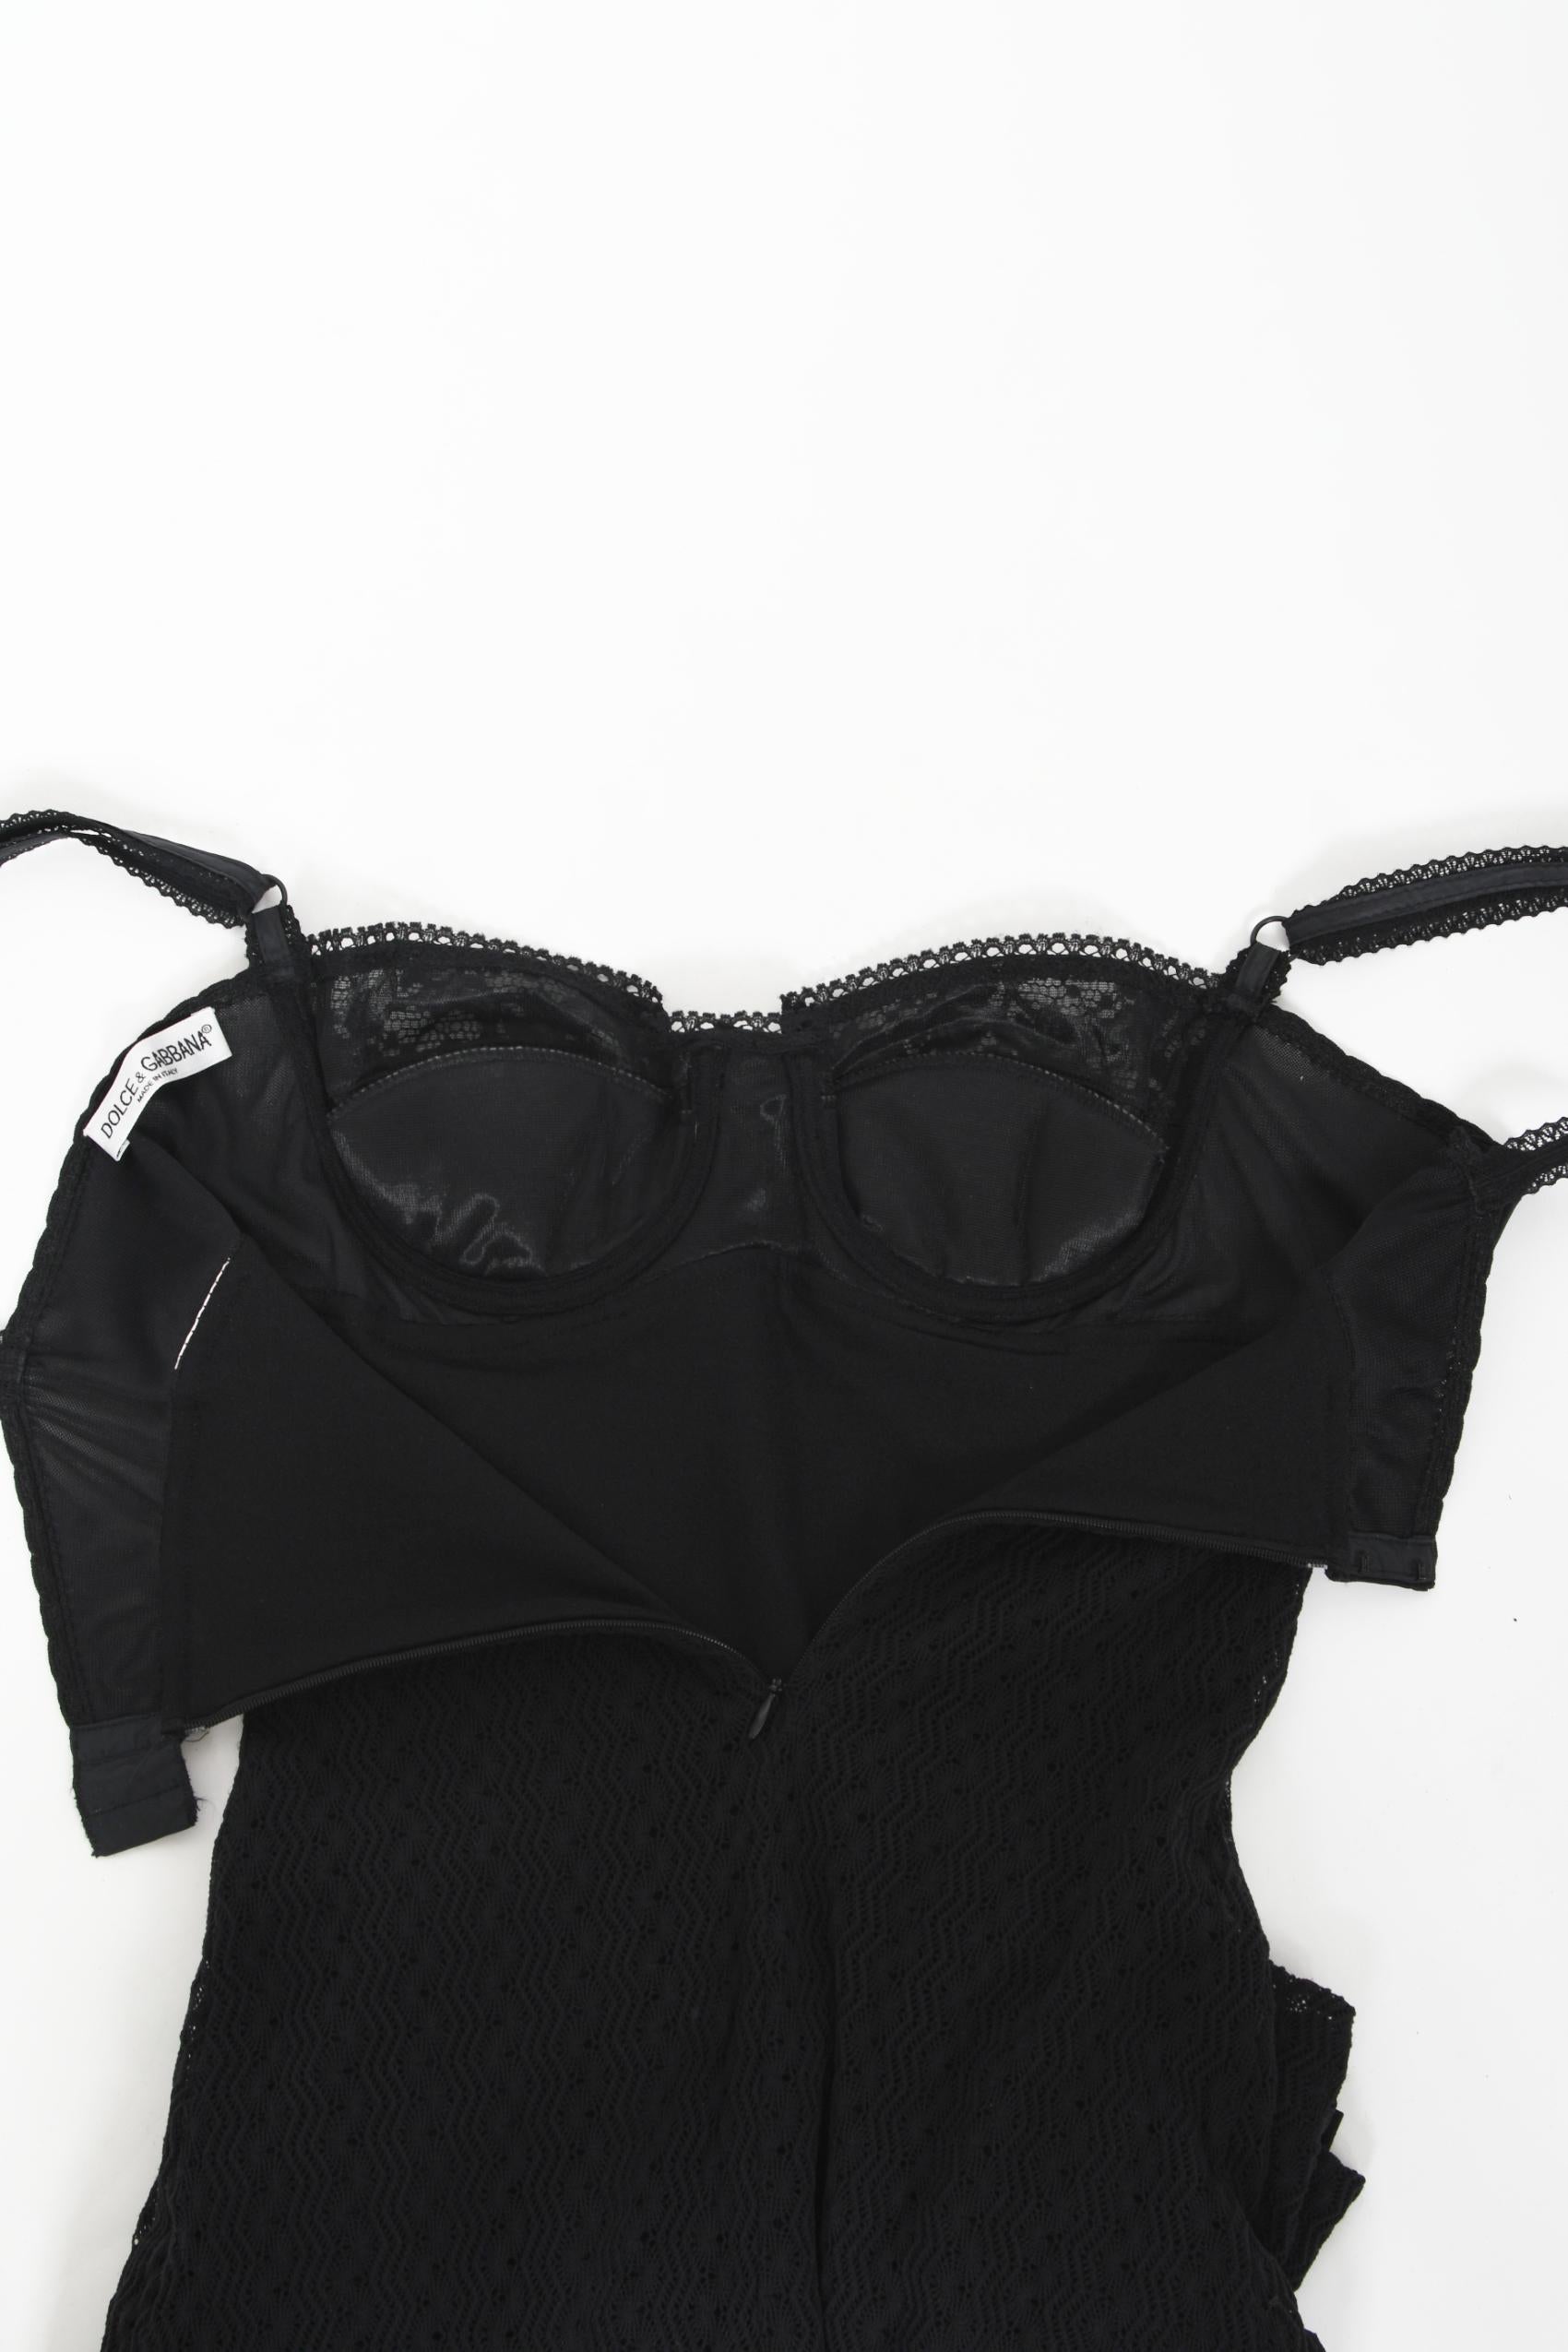 Vintage 1997 Dolce & Gabbana Black Stretch Silk Knit Hourglass Built-In Bra Gown 9